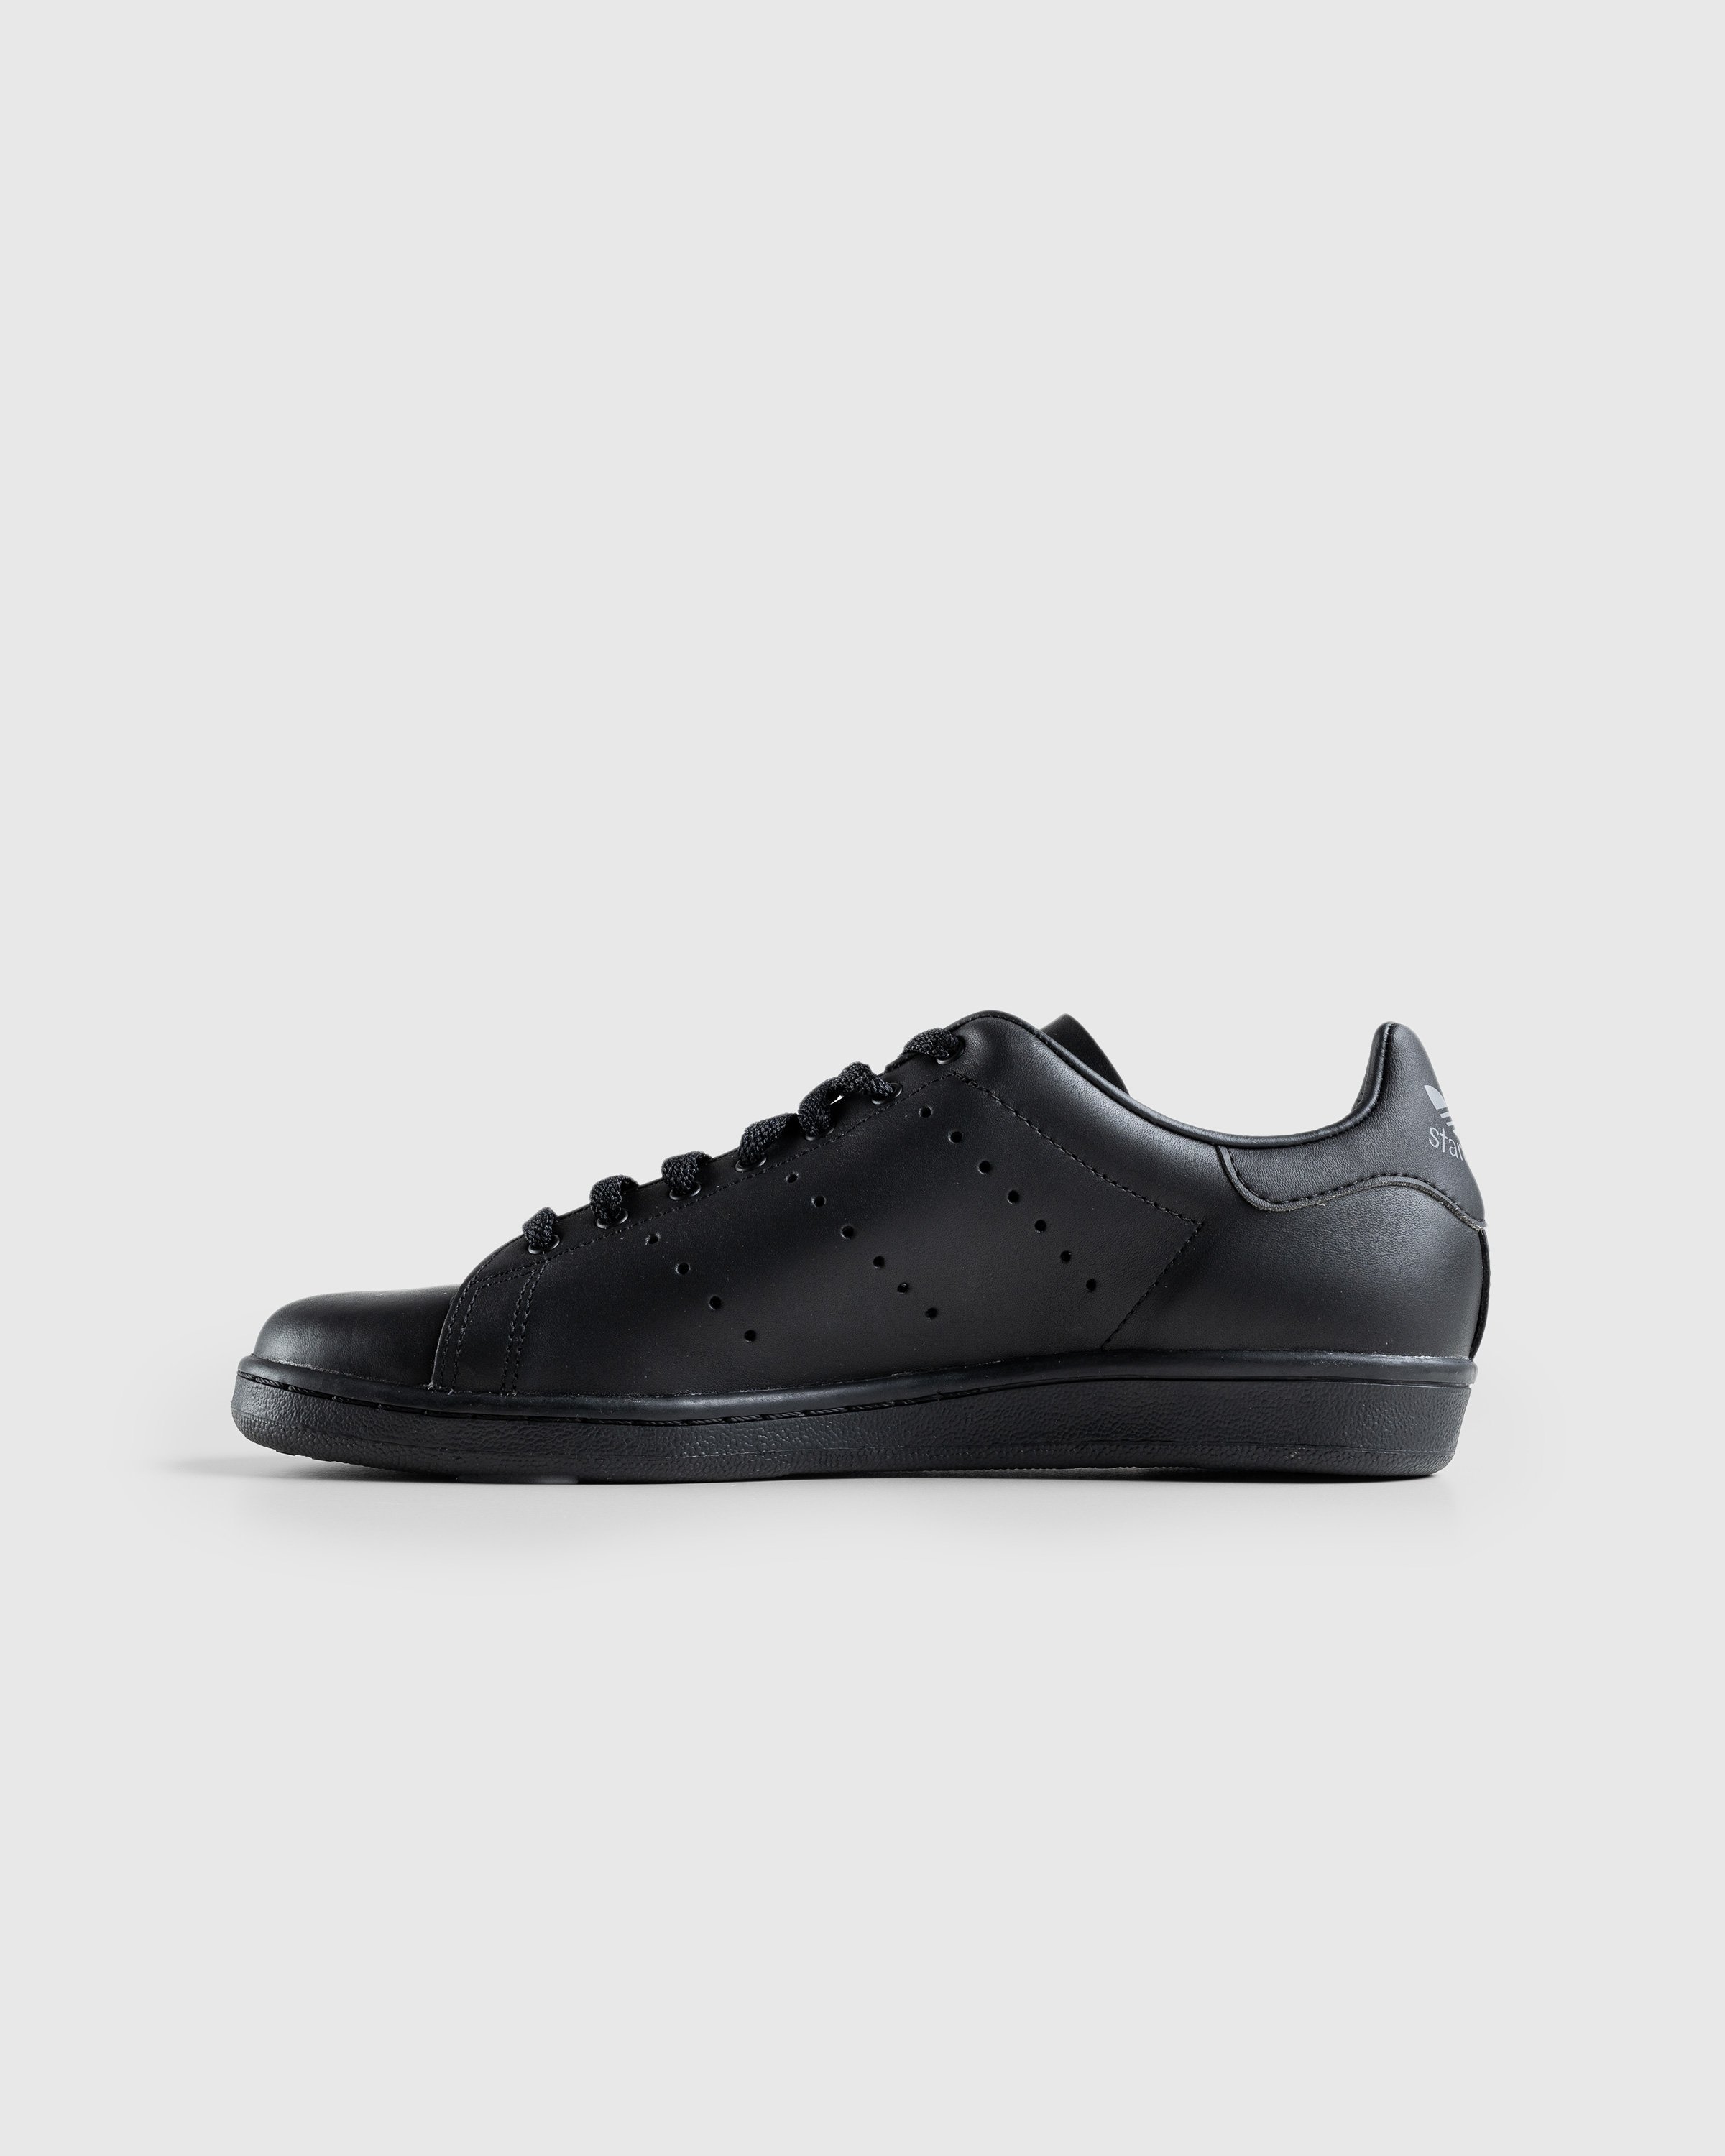 Adidas - Stan Smith 80s Black - Footwear - Black - Image 2